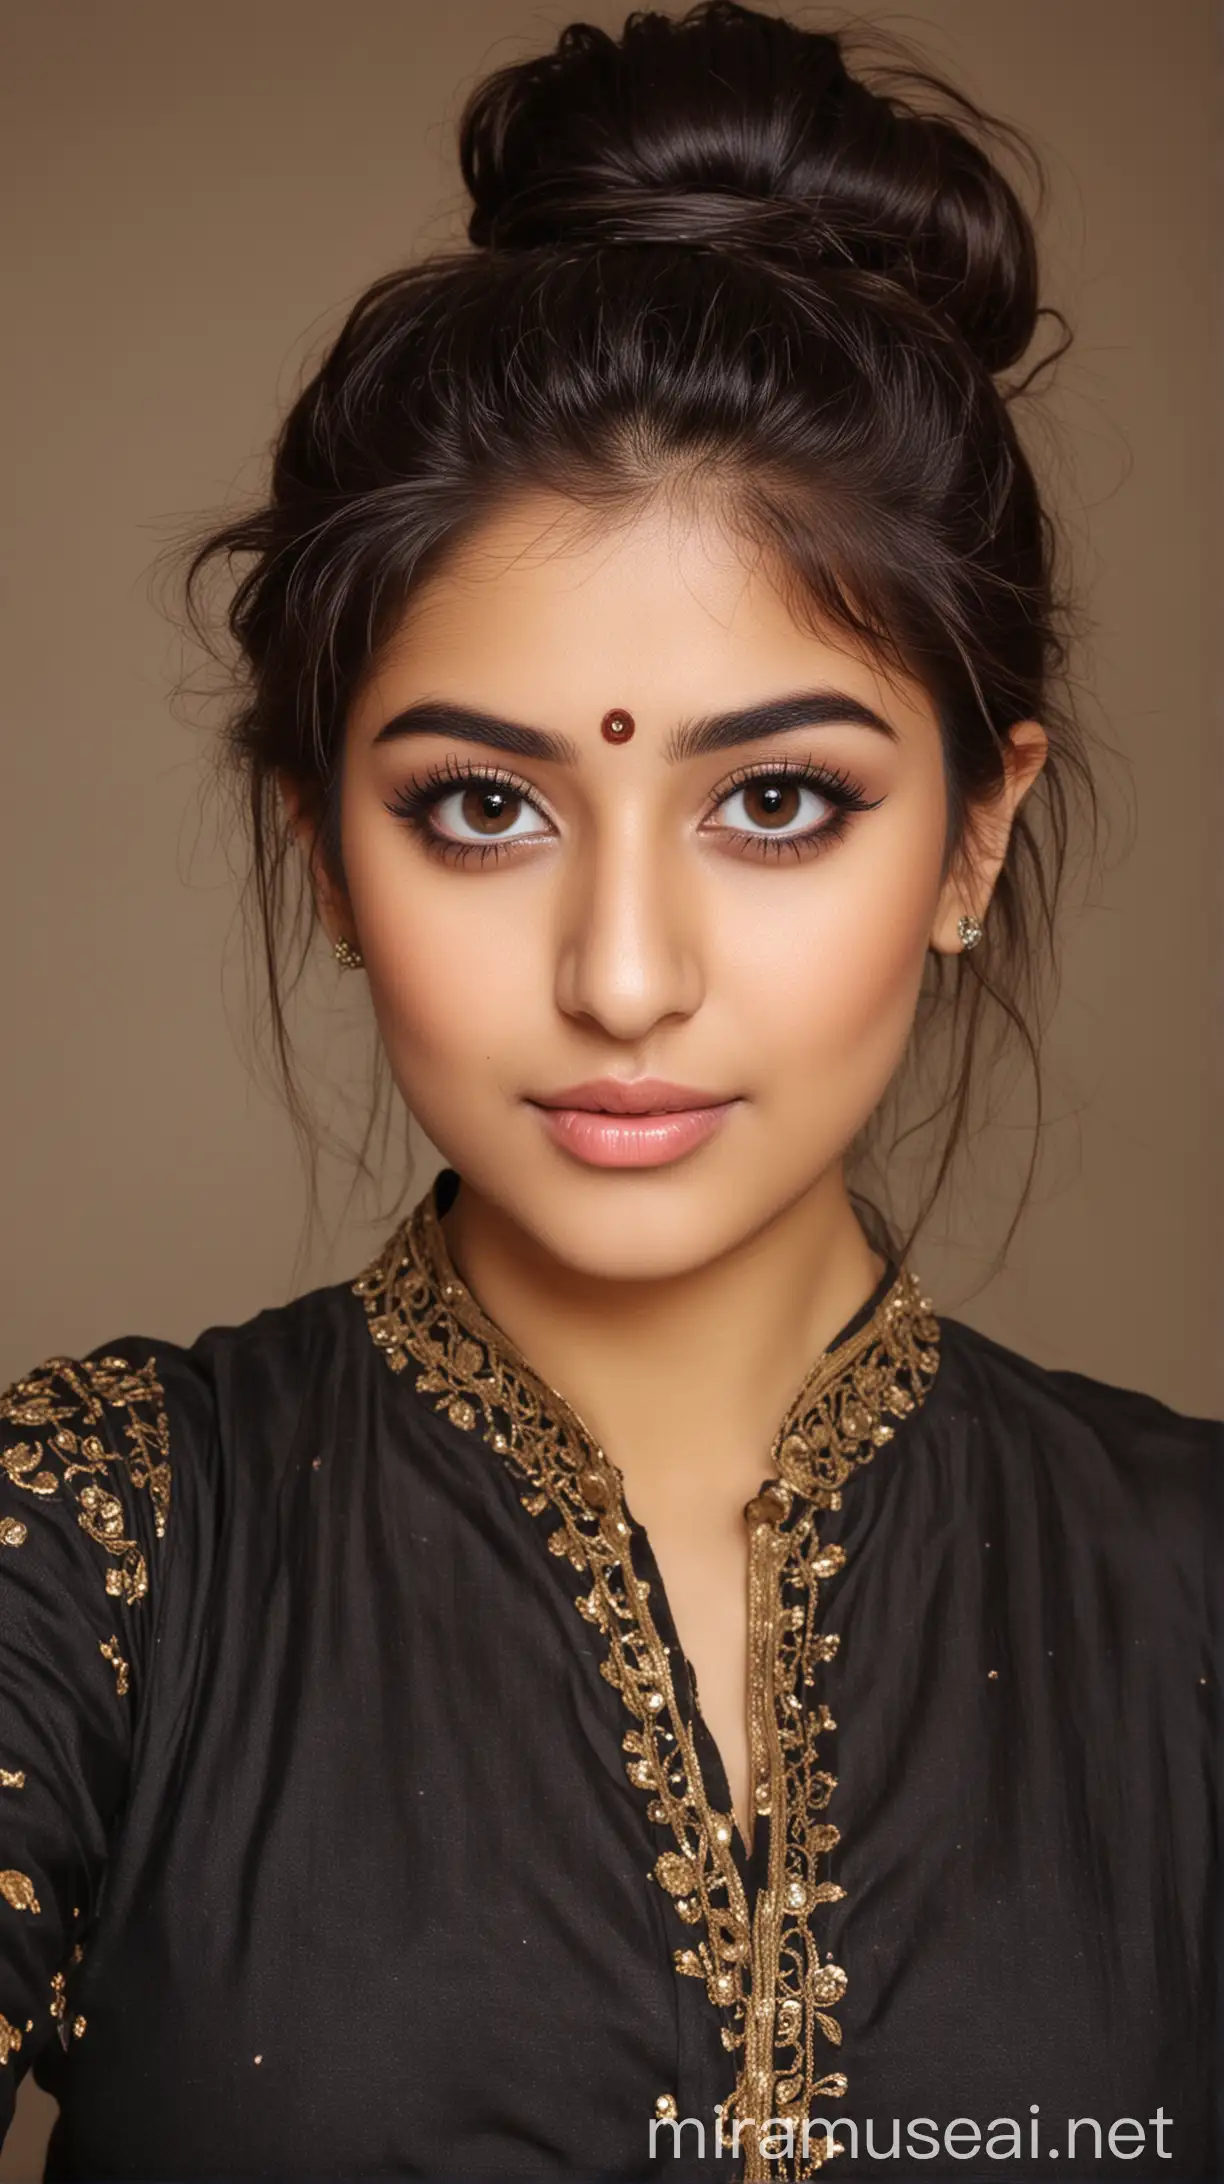 Pakistani beautiful girl,,messy hair bun ,,cute face,,Indian makeup,,medium shots photo 